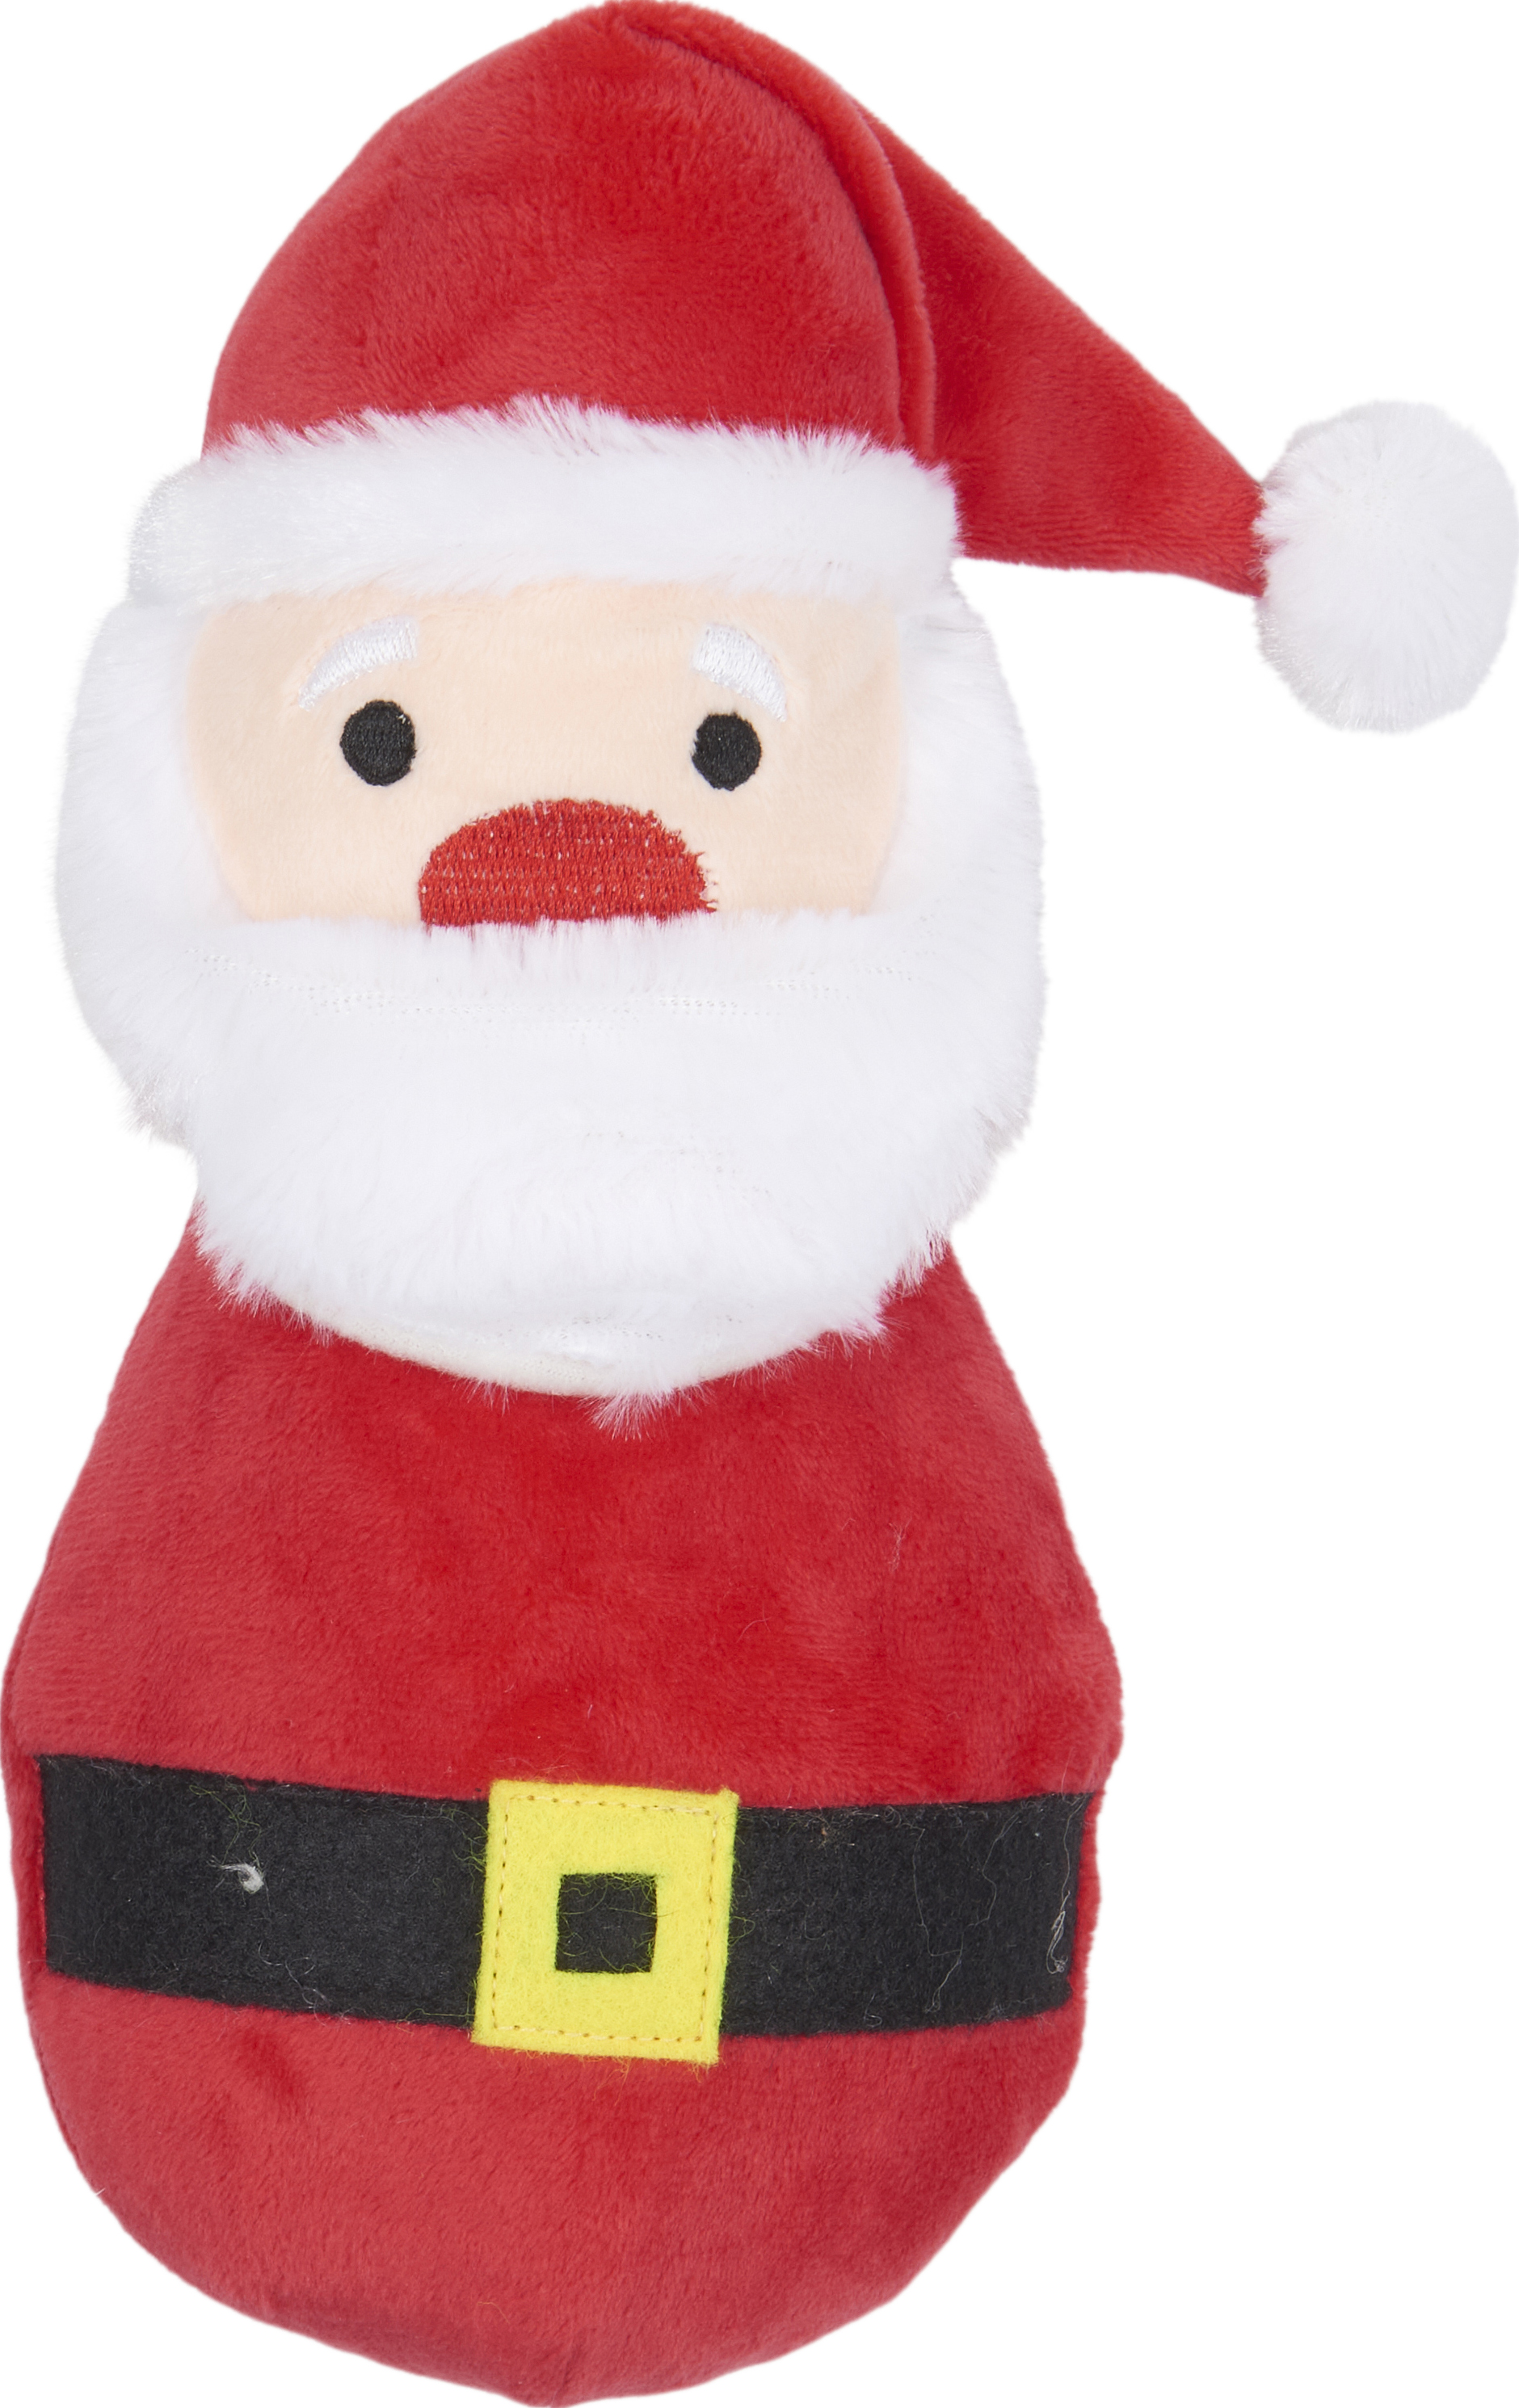 Companion Plush Santa Claus Dog Toy, 28cm